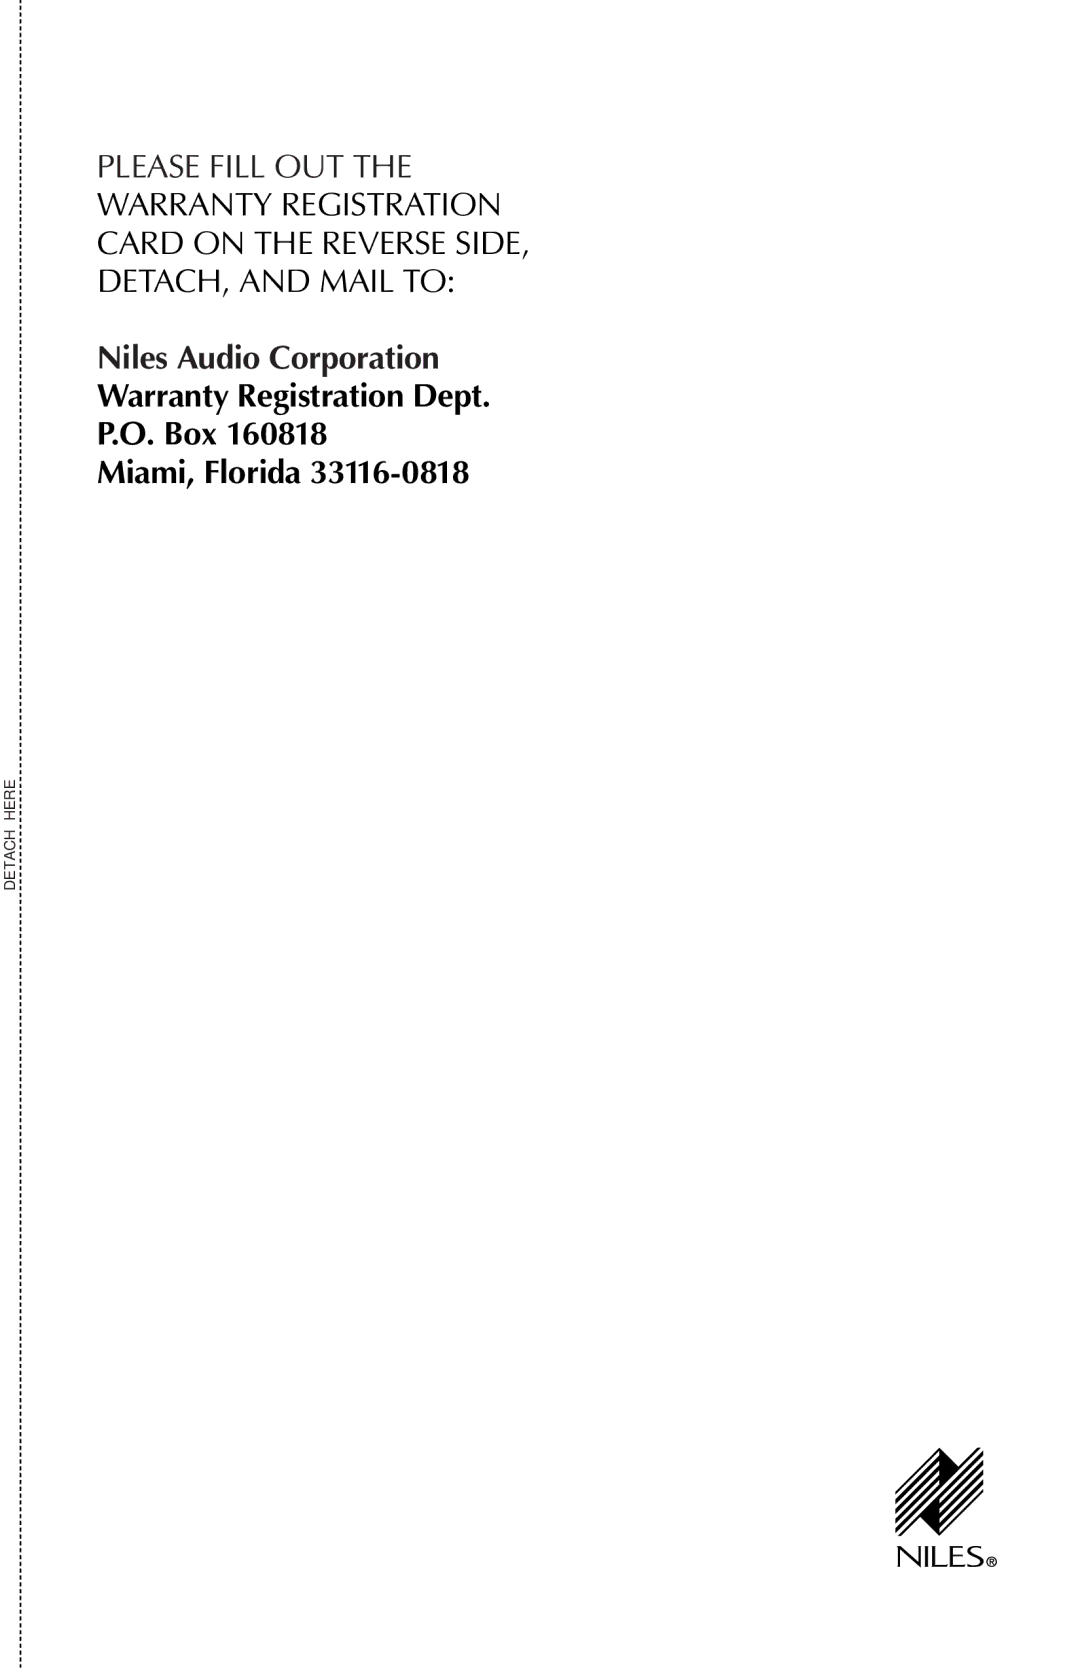 Niles Audio HD8.3, HD5, HD6 manual Niles Audio Corporation 